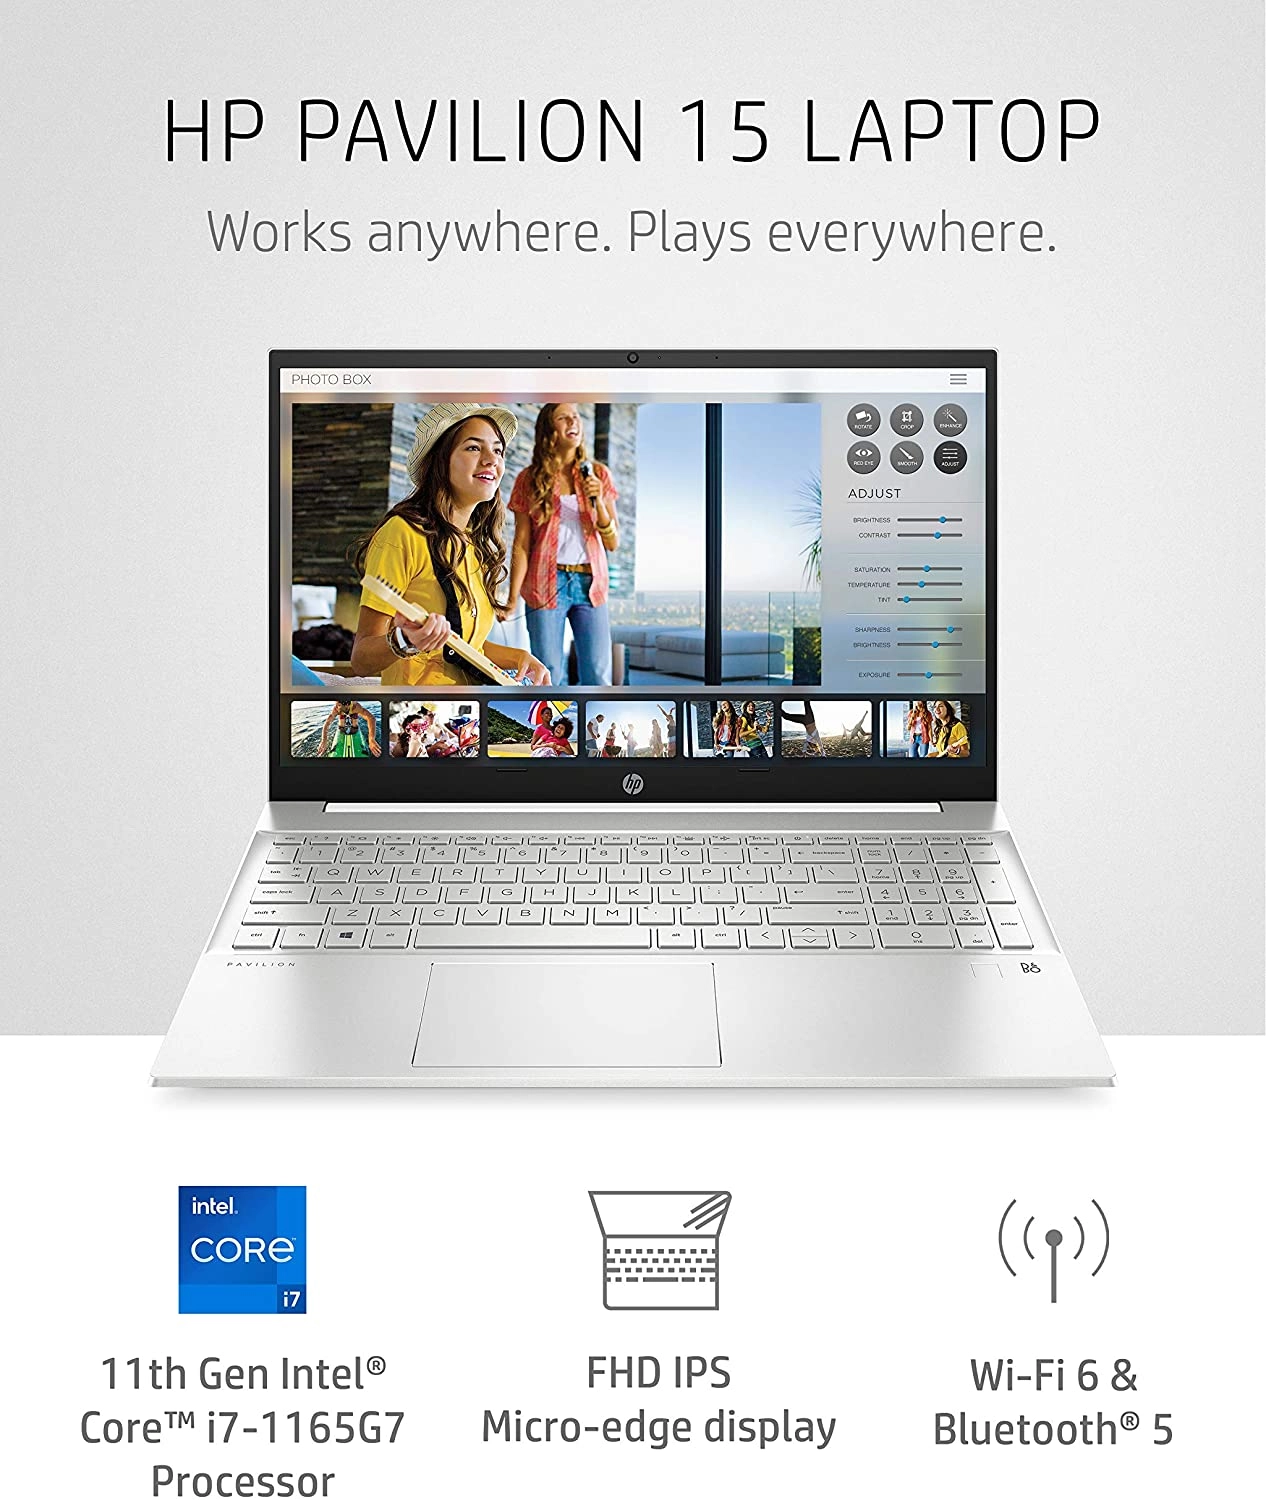 HP Pavilion 15 Laptop laptop image